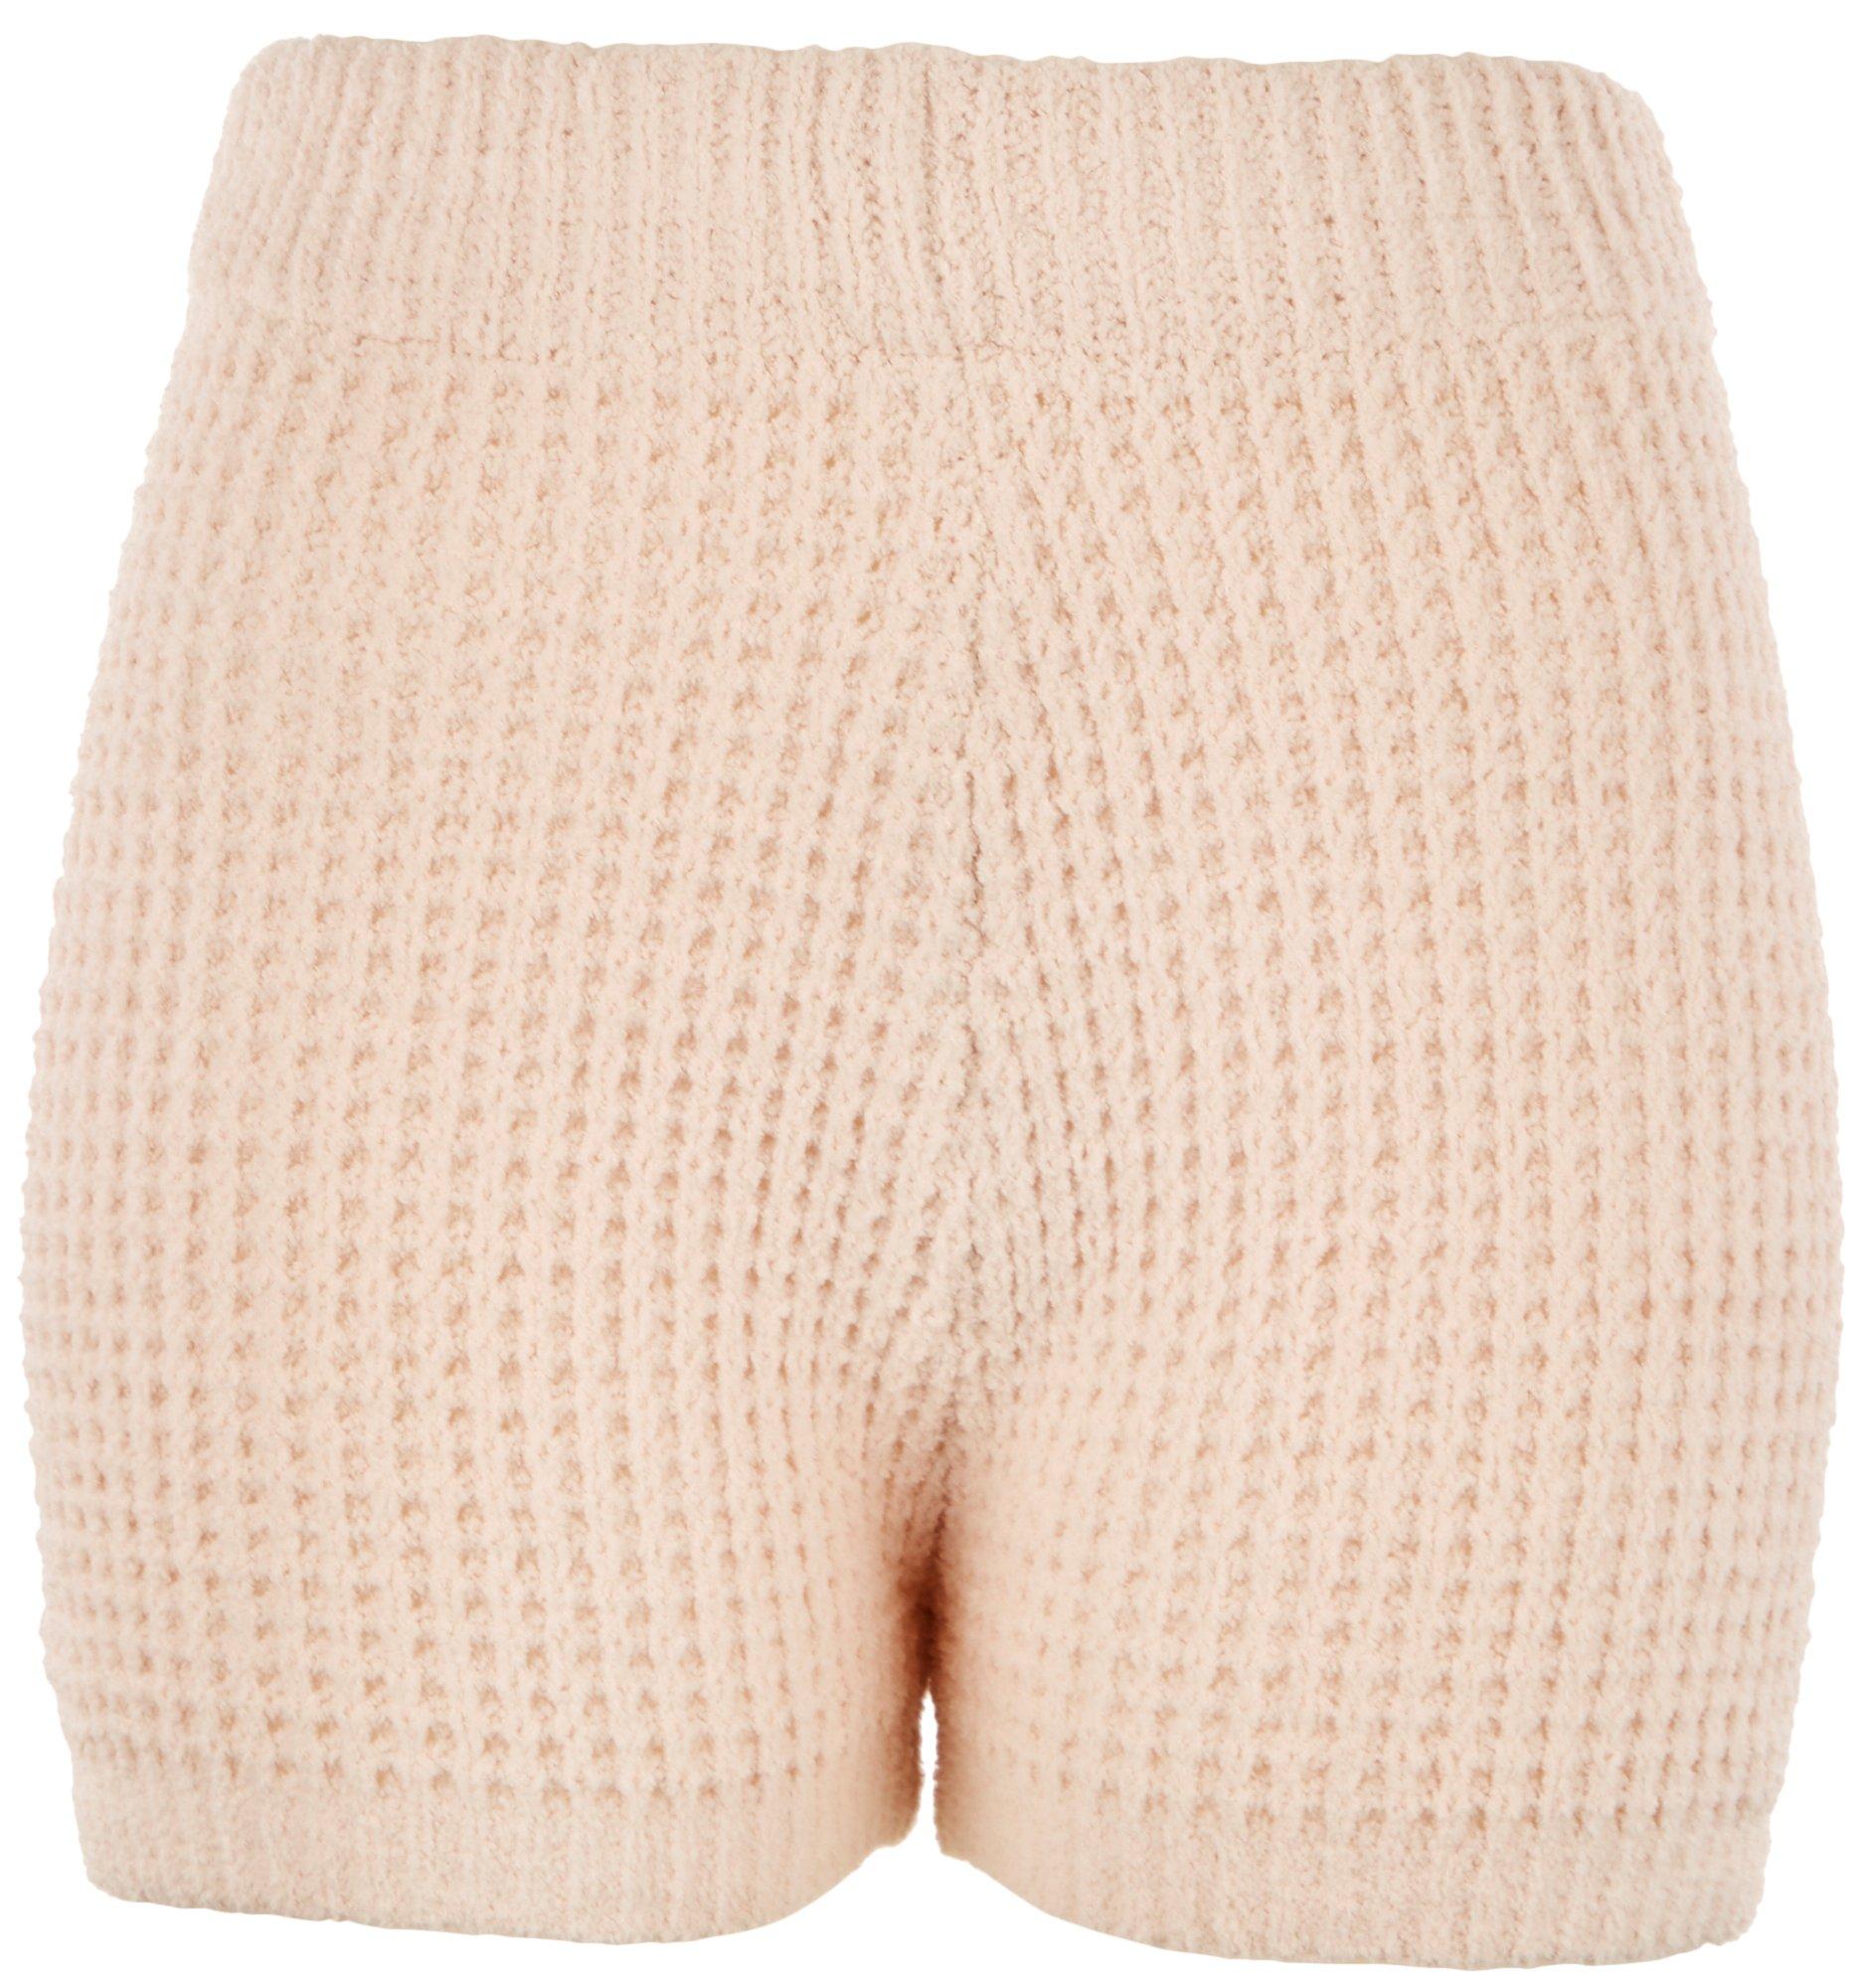 Juniors Knit Shorts